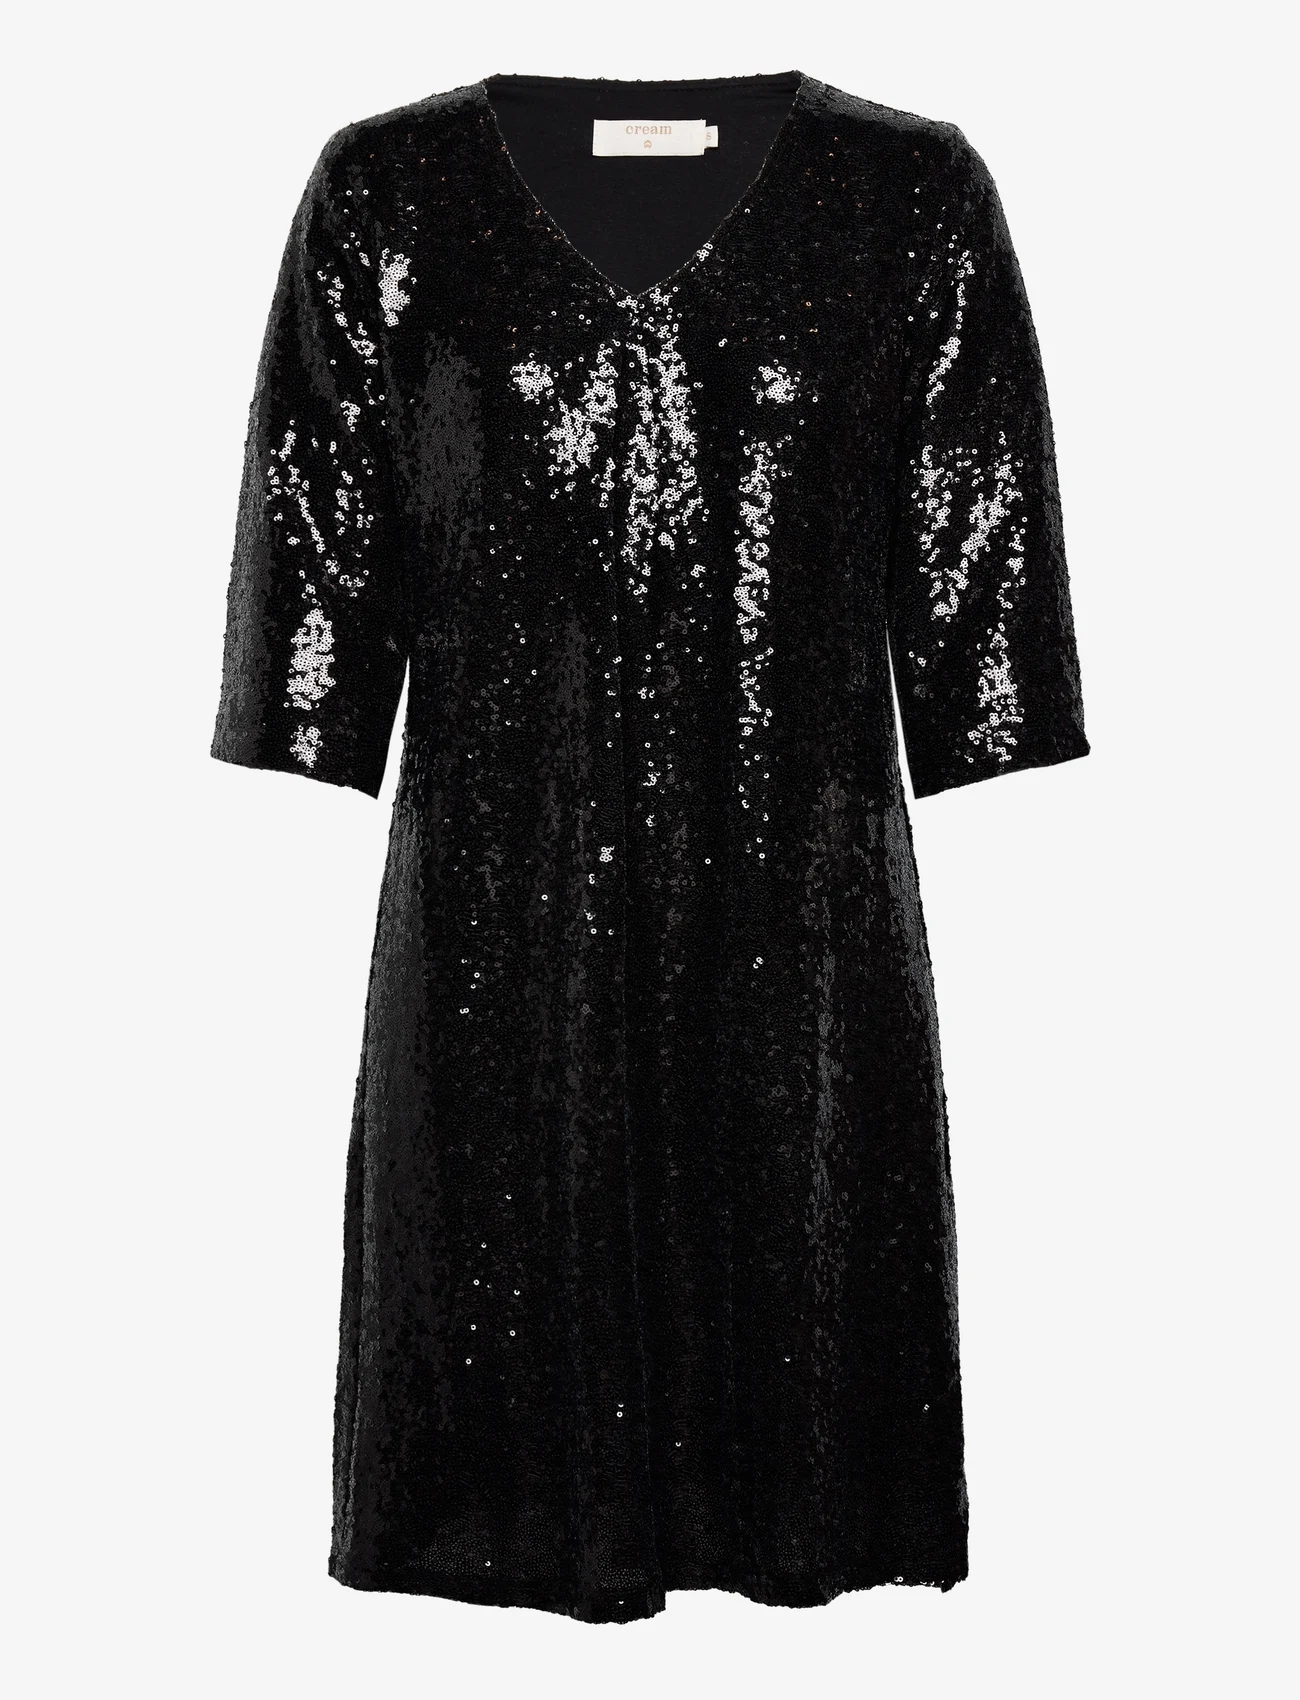 Cream - CRCupid Sequin Dress - Kim Fit - paillettenkleider - pitch black - 0